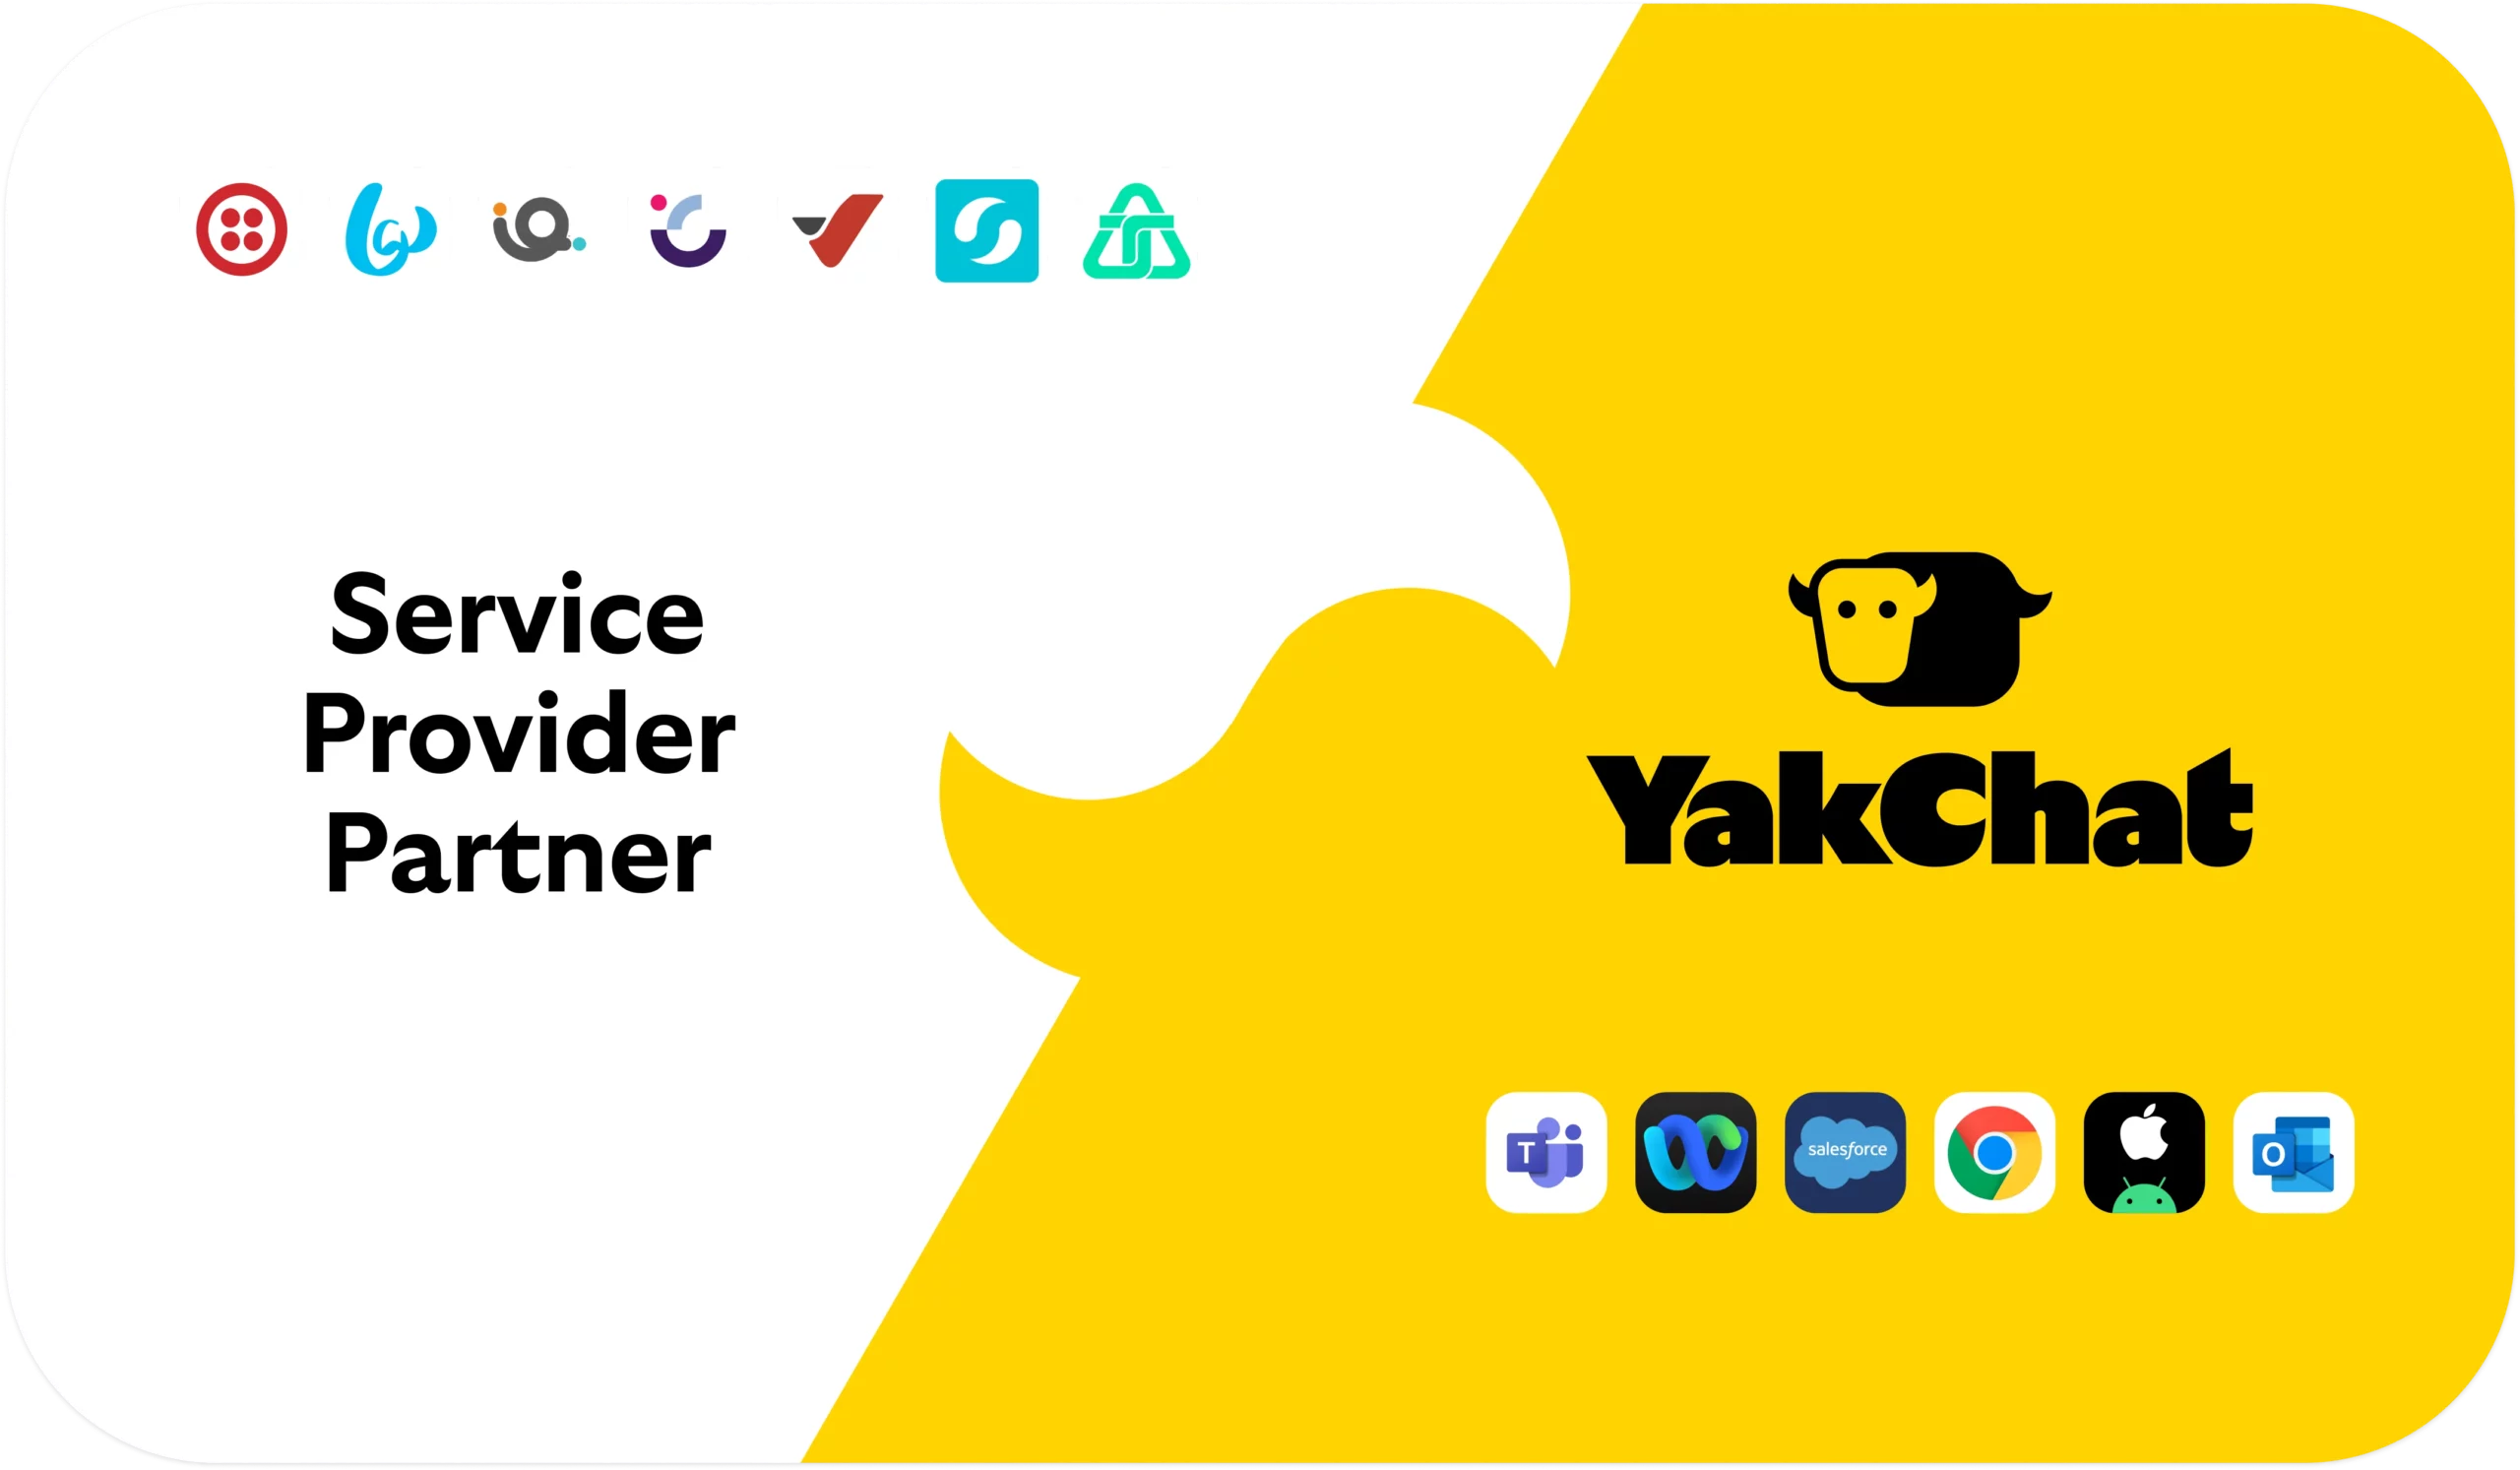 Partnership diagram showing values of a YakChat and Service Provider Partner partnership